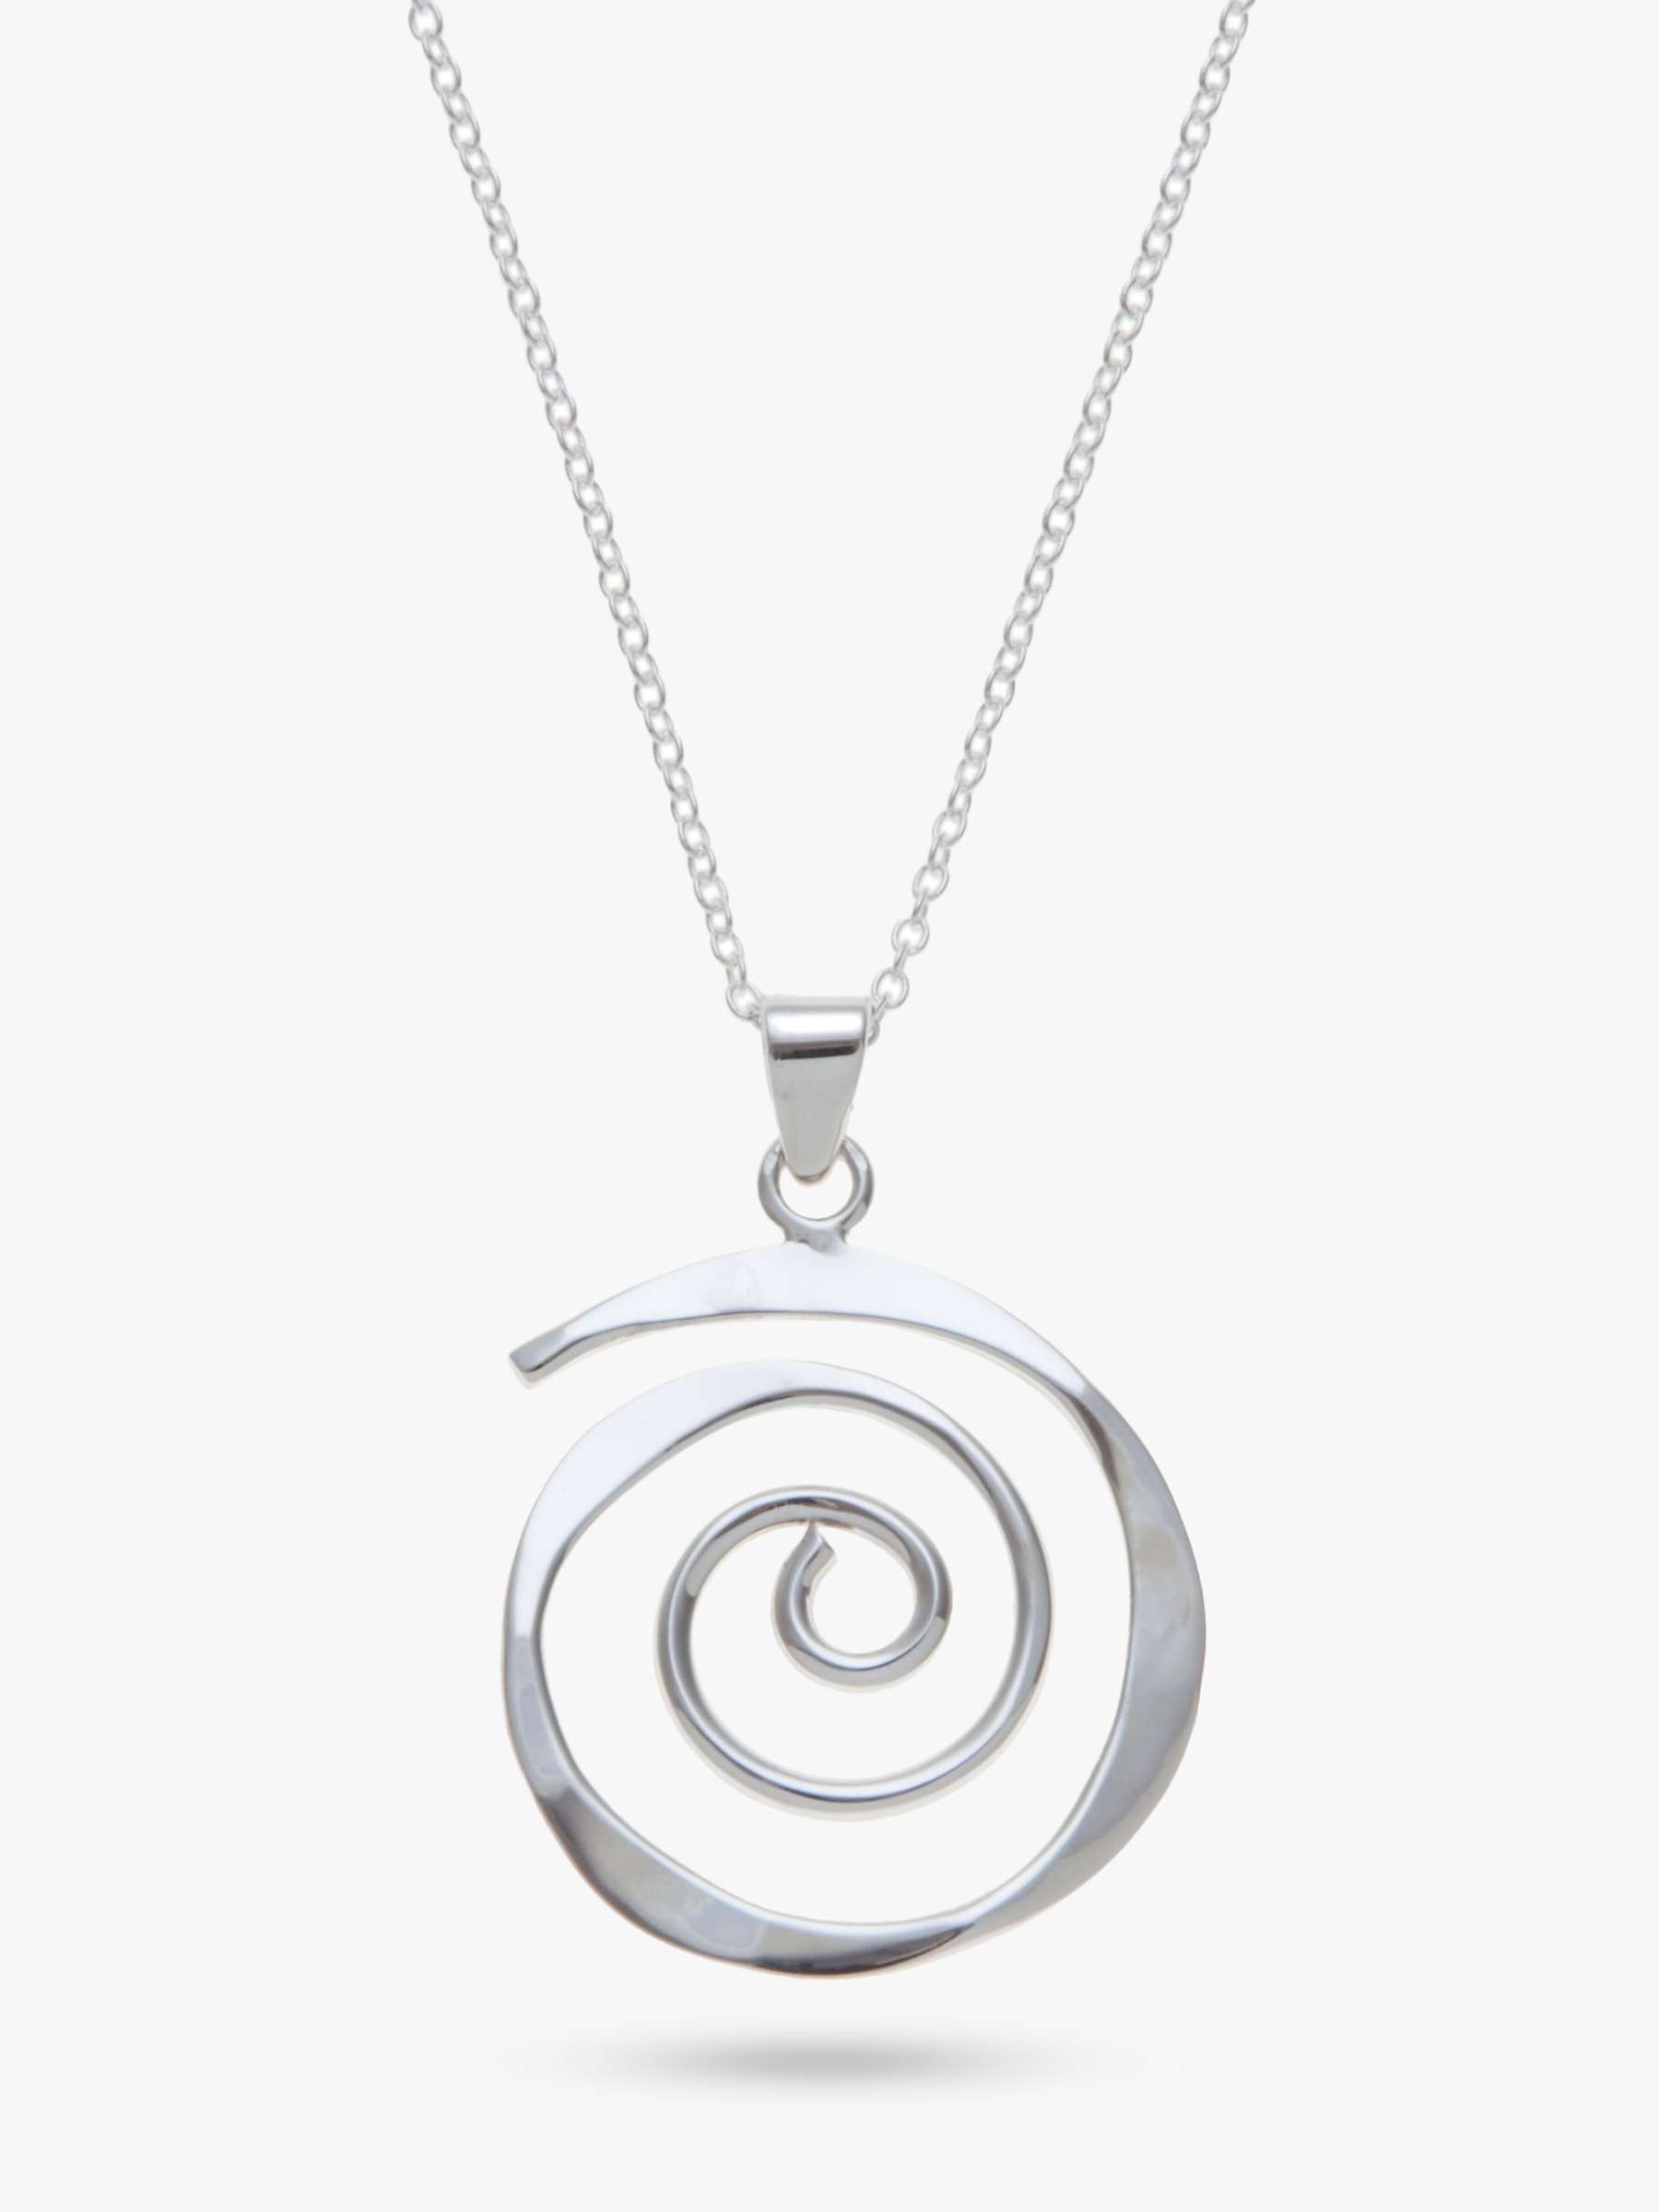 Sterling silver pendant, Spiral  silver pendant